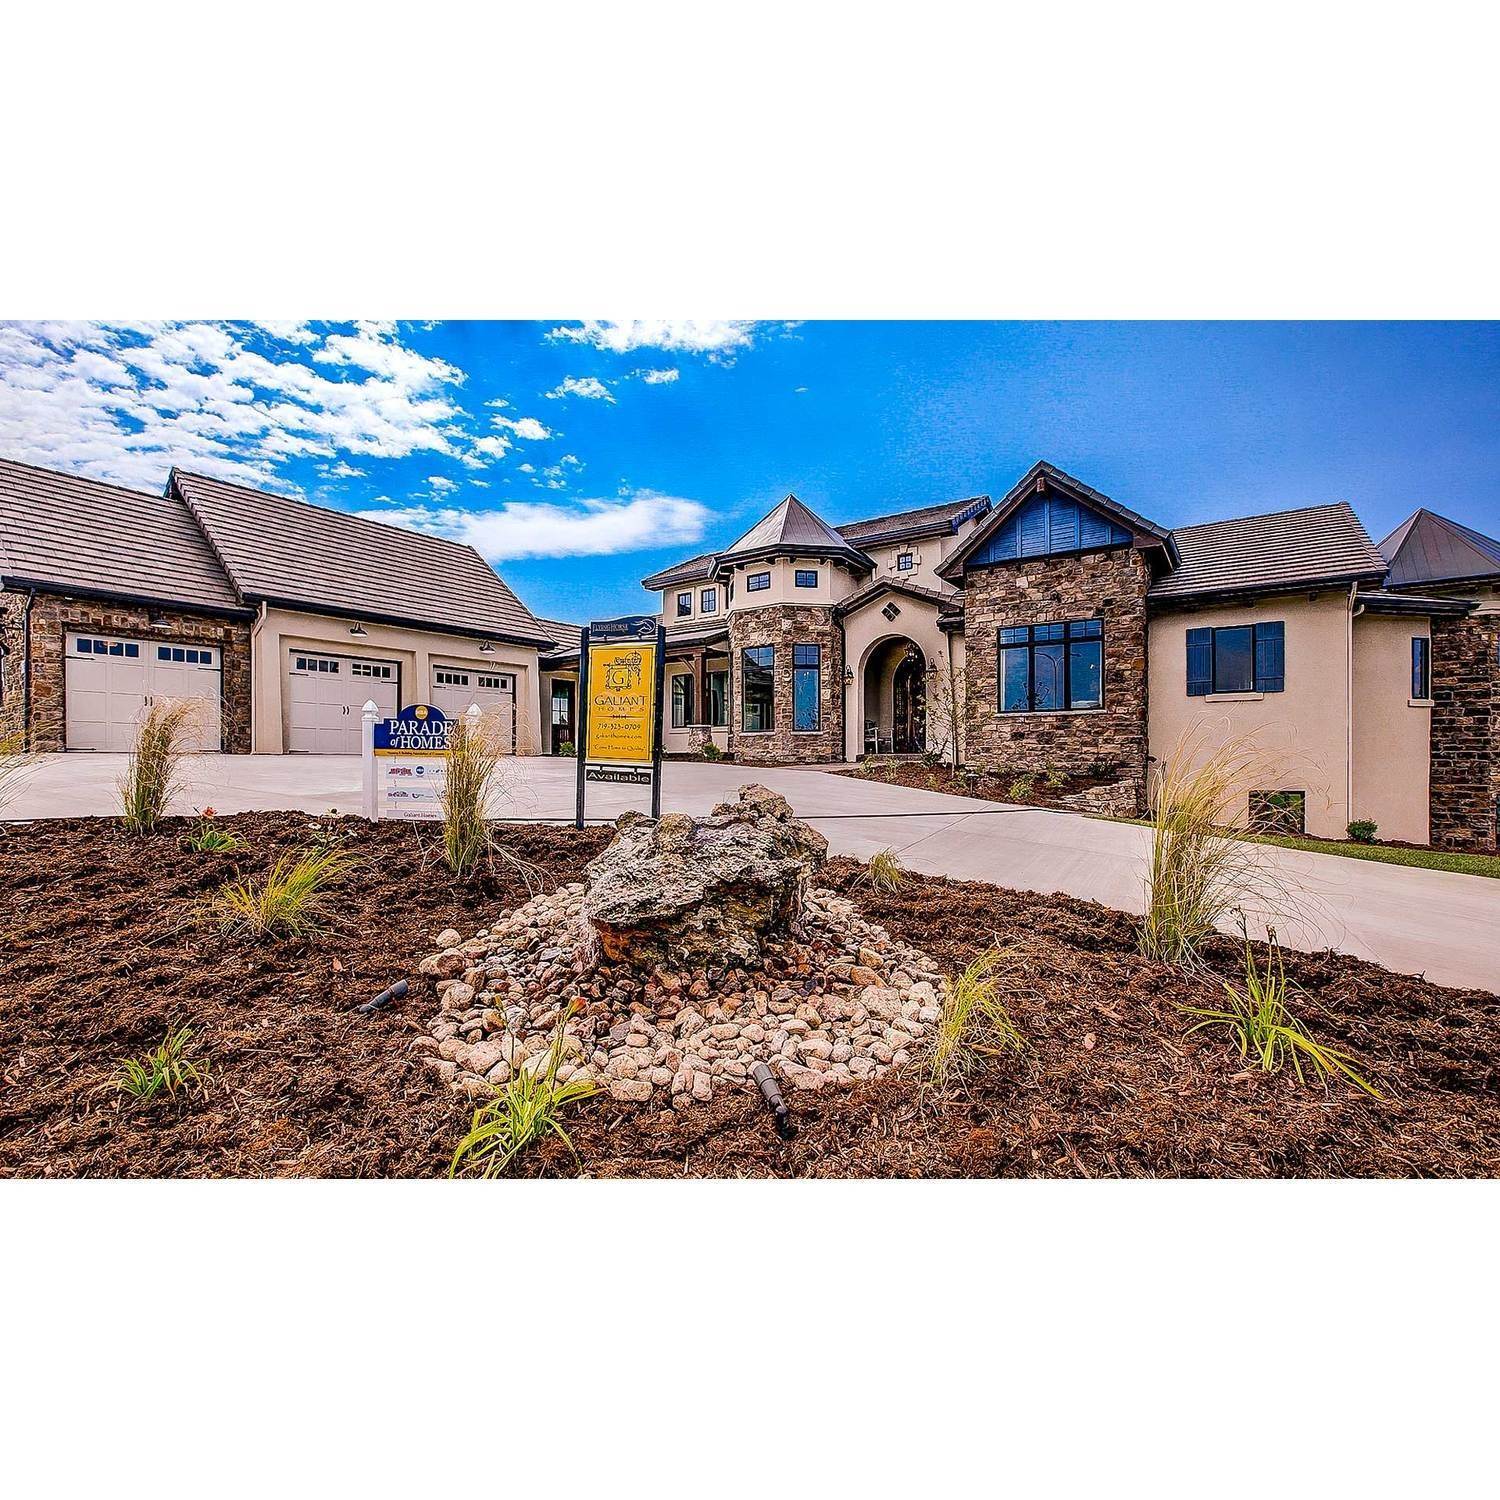 19. Galiant Homes building at 4783 Farmingdale Dr, Colorado Springs, CO 80918